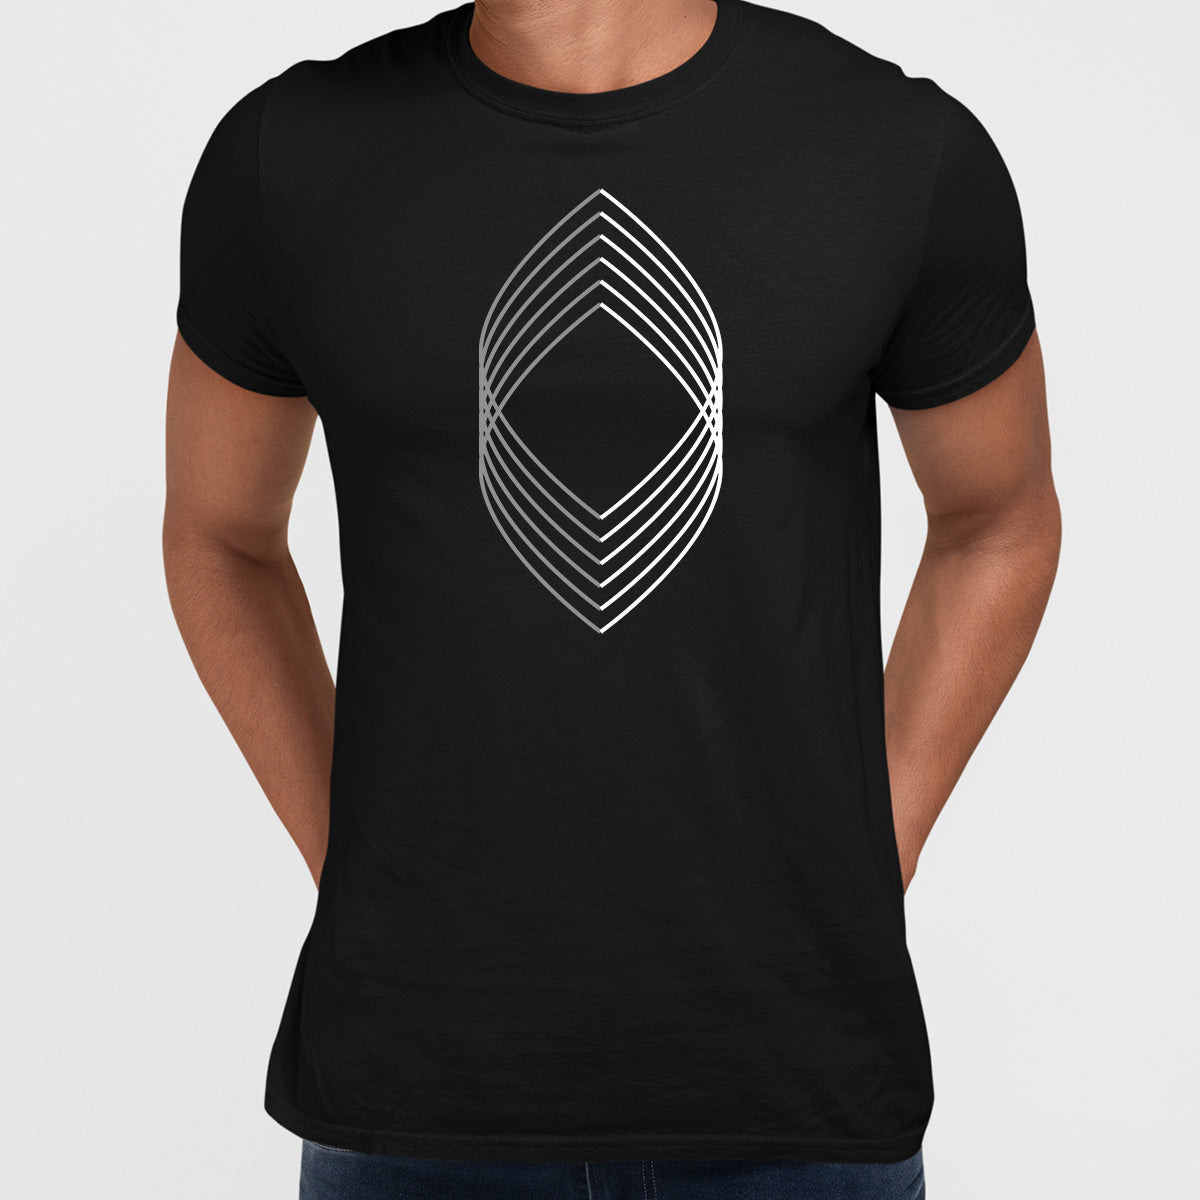 Modern Geometric Elements - Line Dots & Shapes Printed t-shirts Unisex Sample 06 - Kuzi Tees